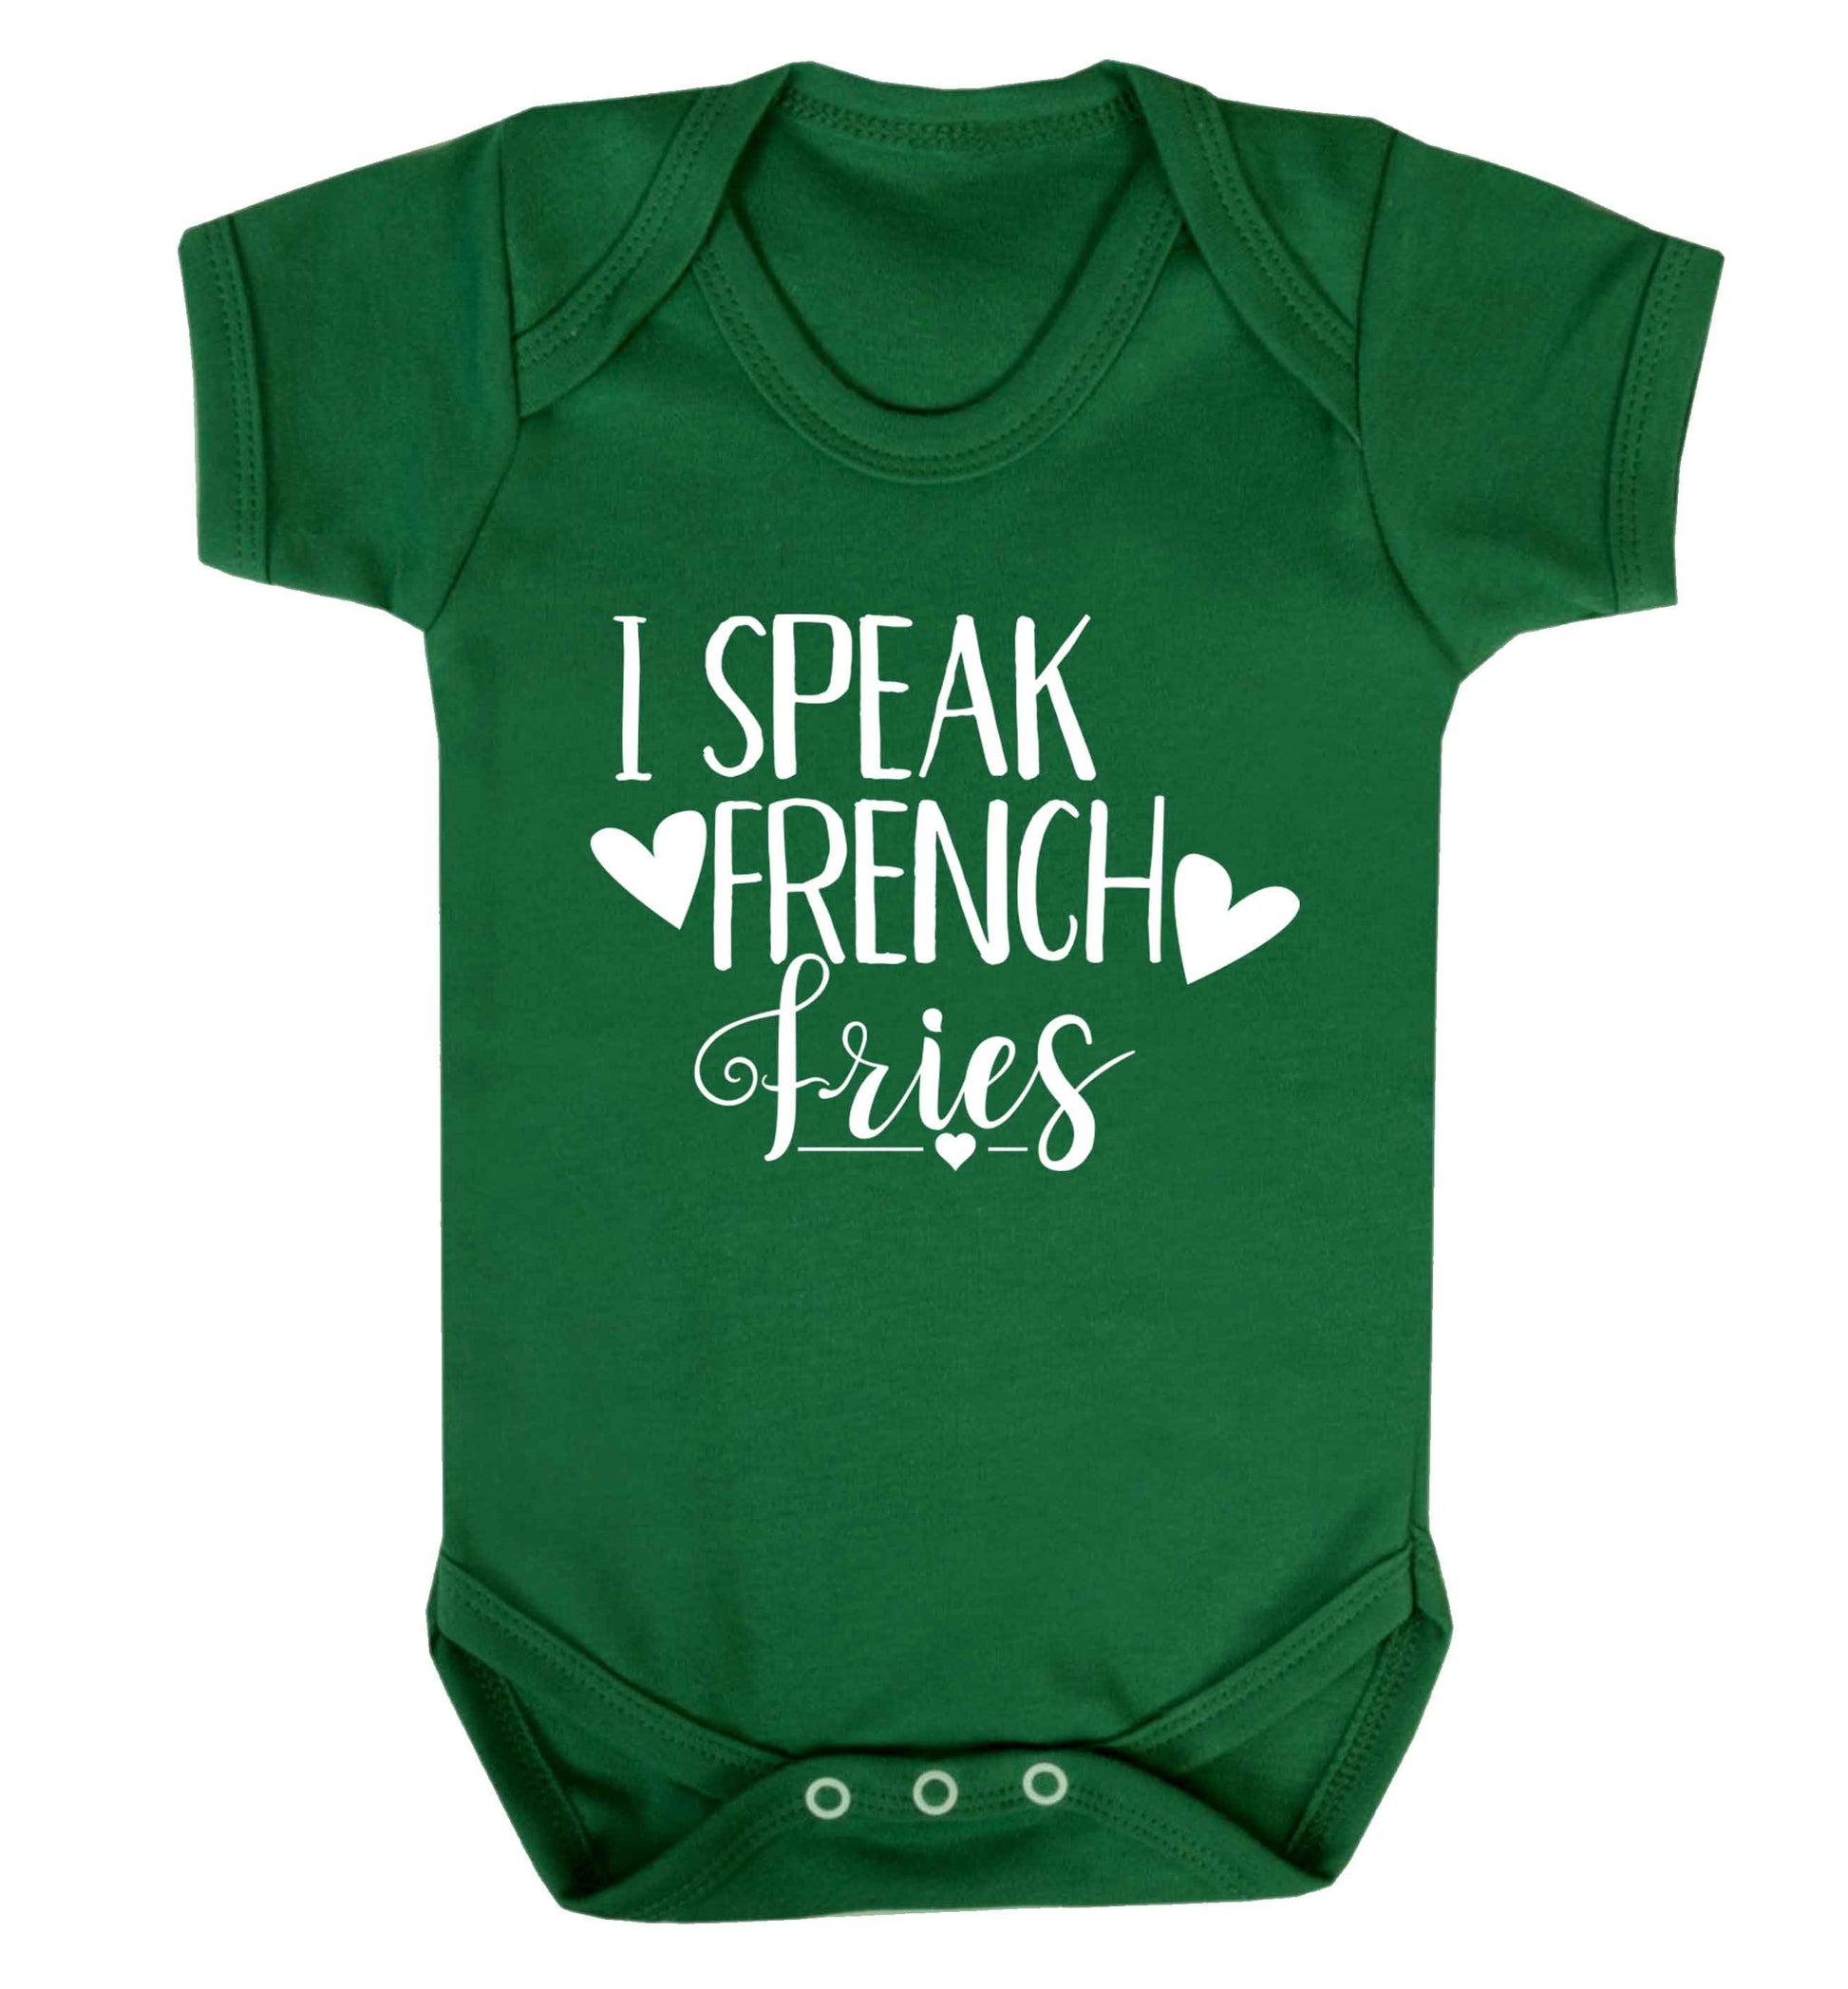 I speak French fries Baby Vest green 18-24 months